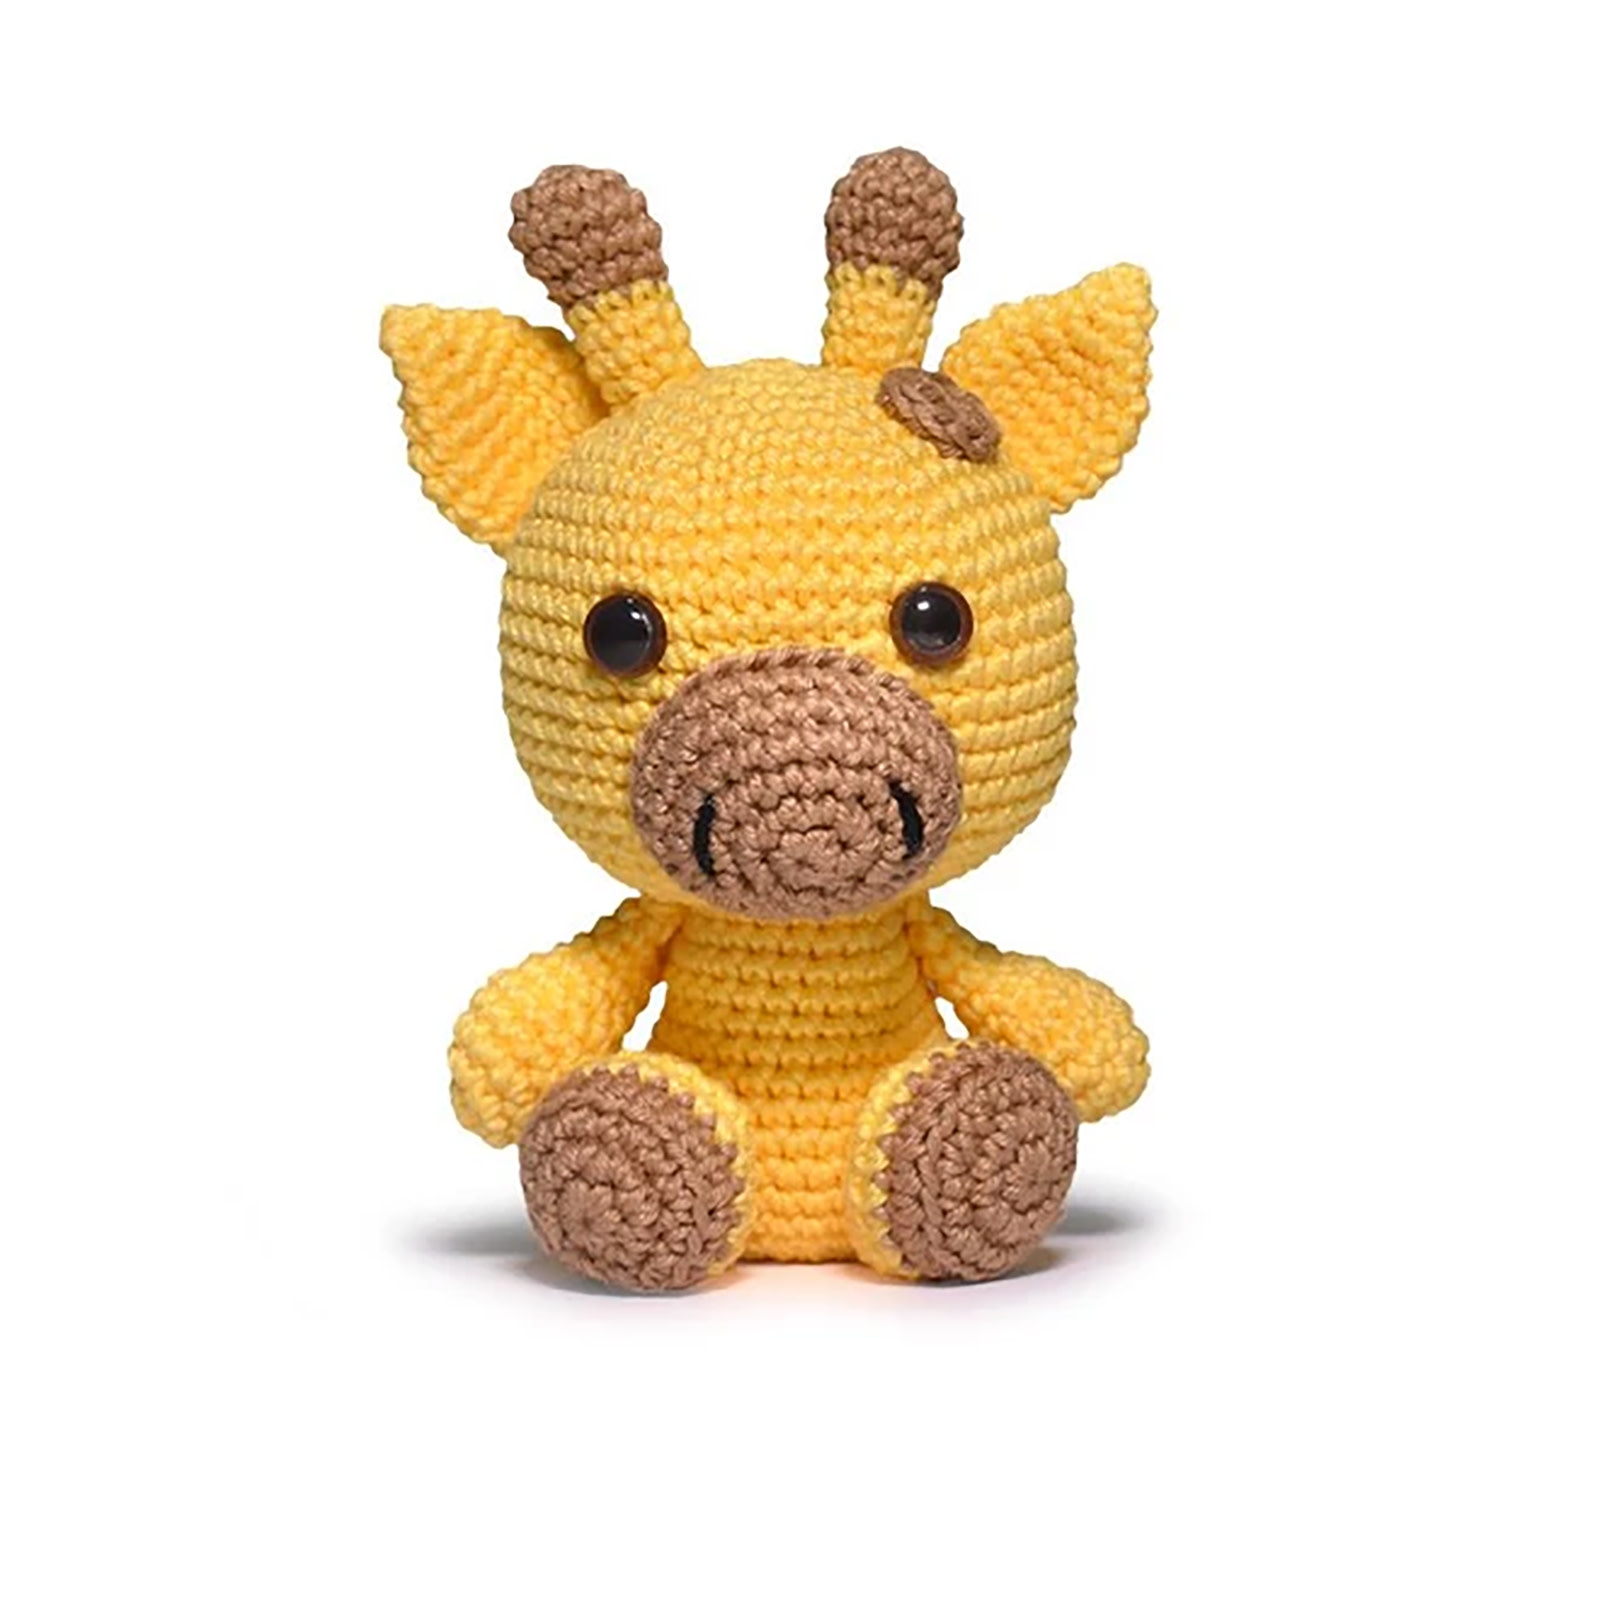 Círculo Amigurumi Crochet Kit - Cats & Dogs - All Included, Easy  Instructions - Crochet Kit for Intermediate - Crochet Set - Animal Crochet  Kit